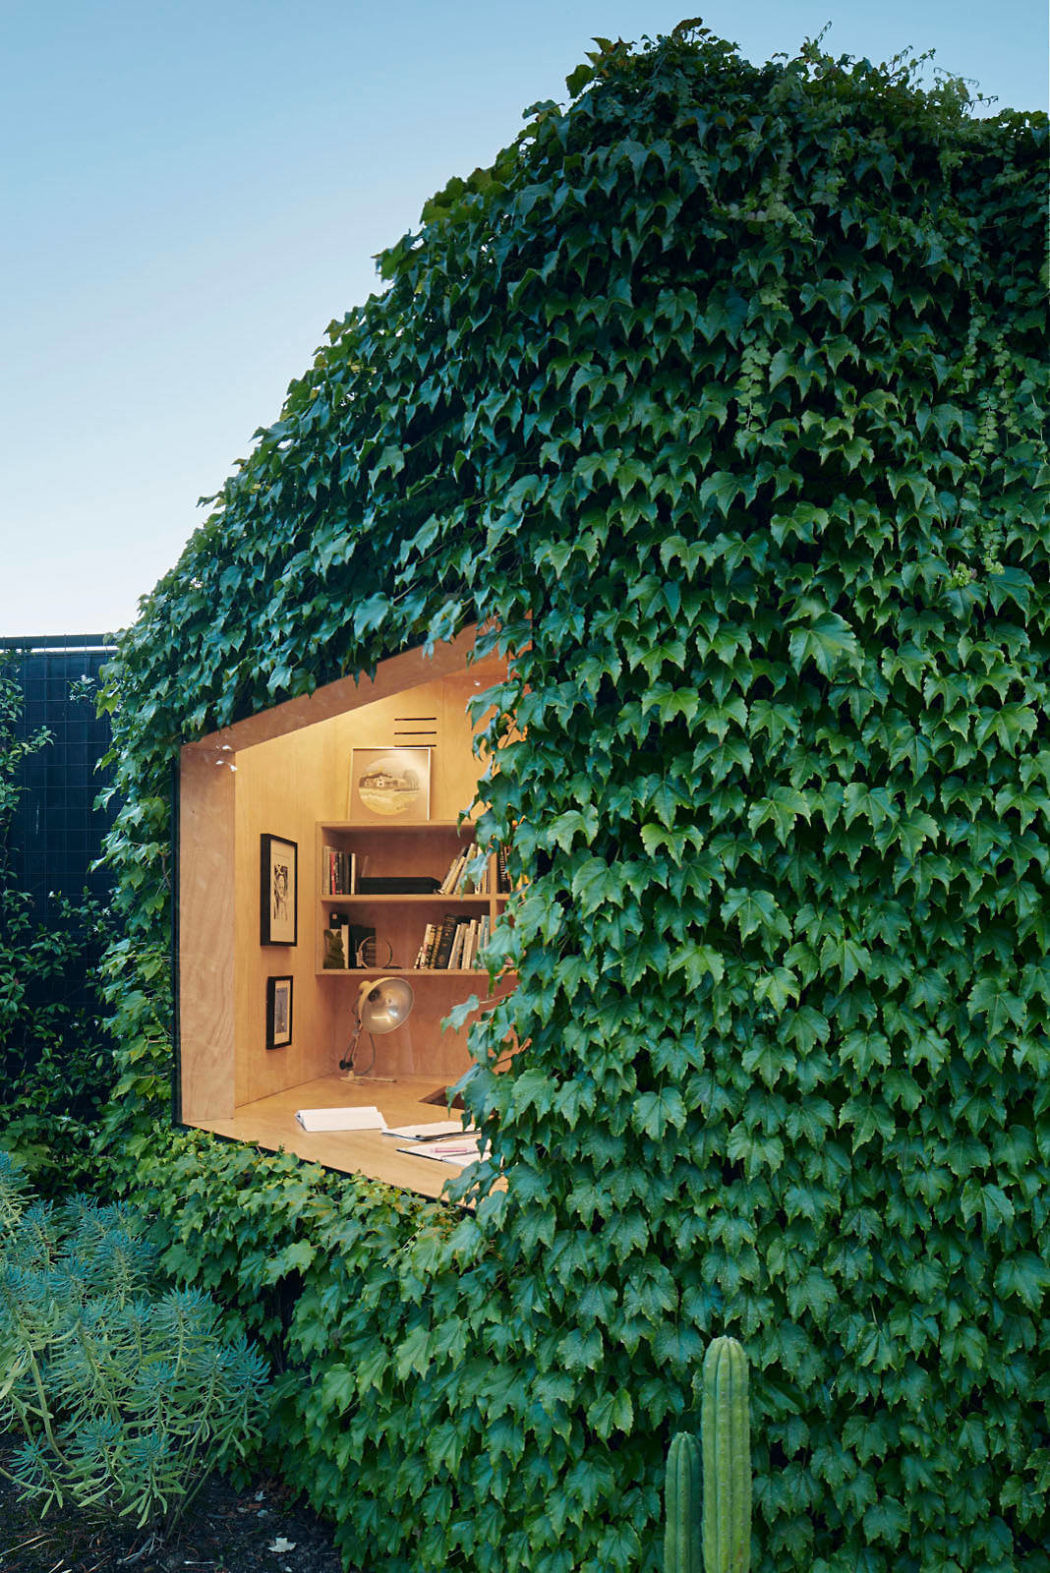 Verdant ivy-clad exterior with a cozy, wooden interior office no